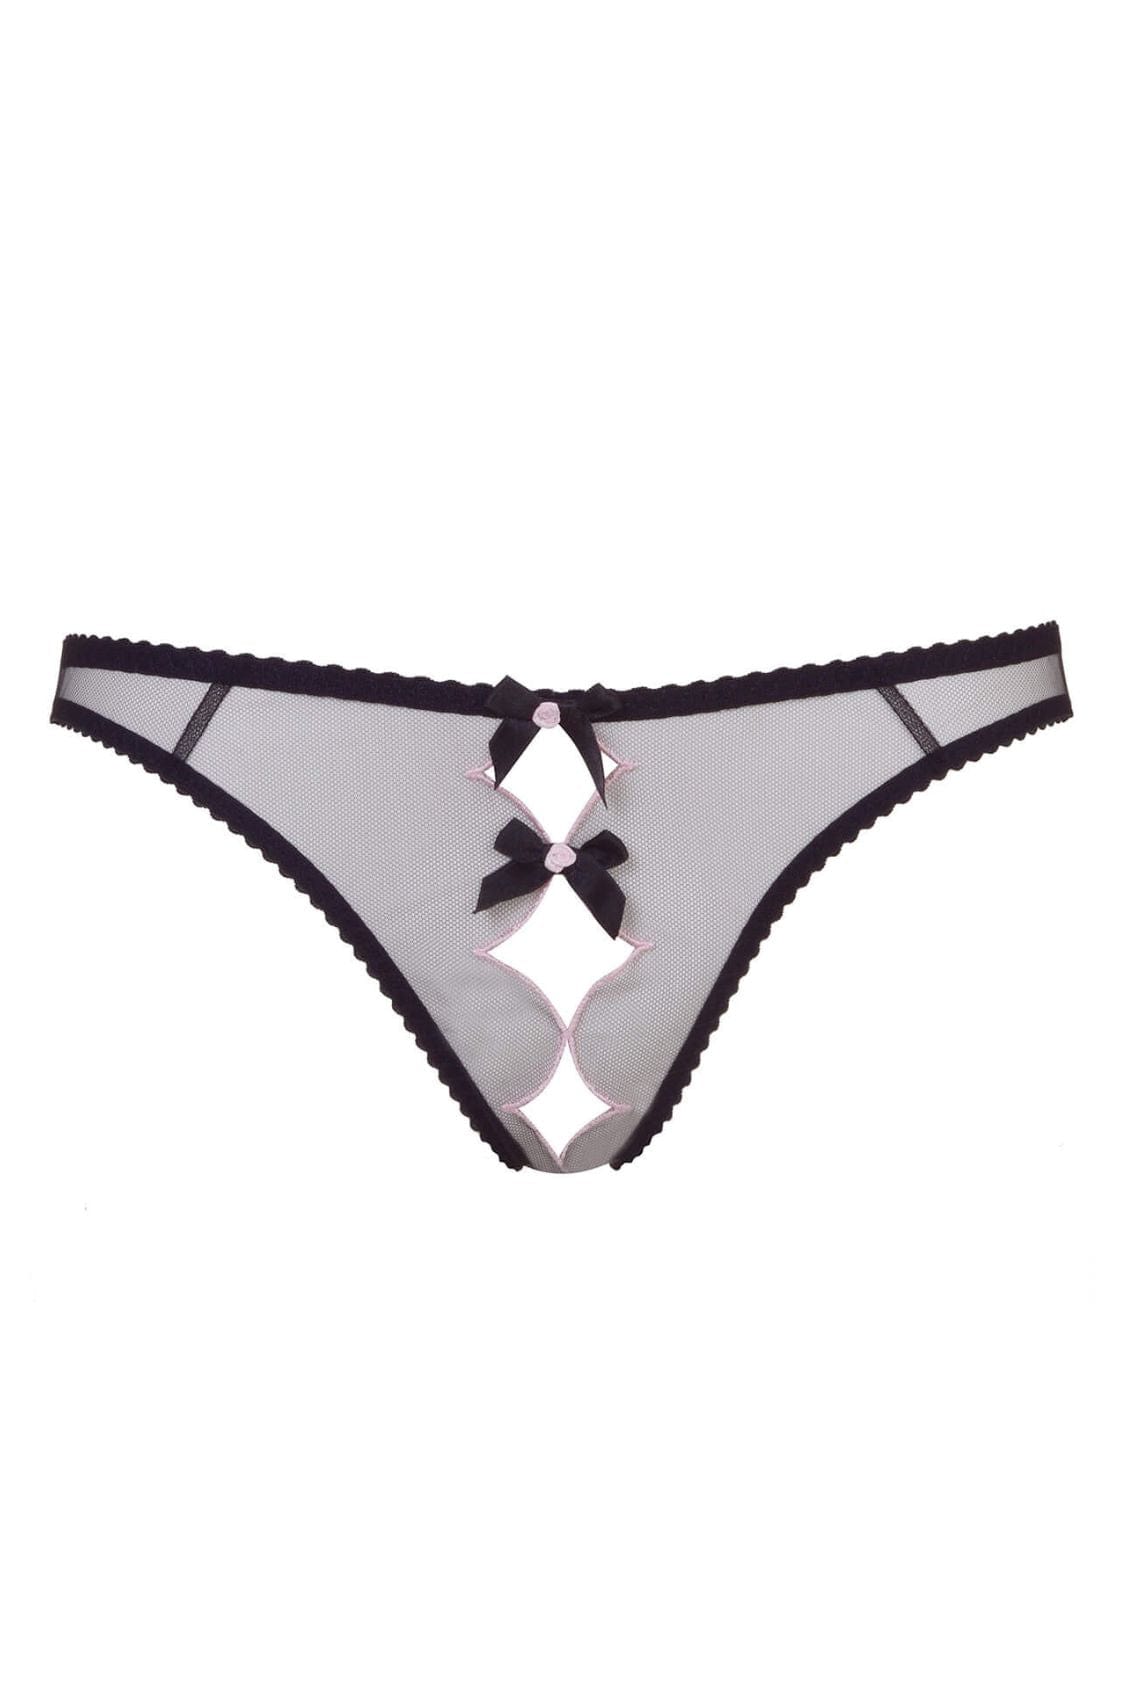 Trending Black Lace Sexy Underwire - See Through Bra - Thong Lingerie –  Deals DejaVu